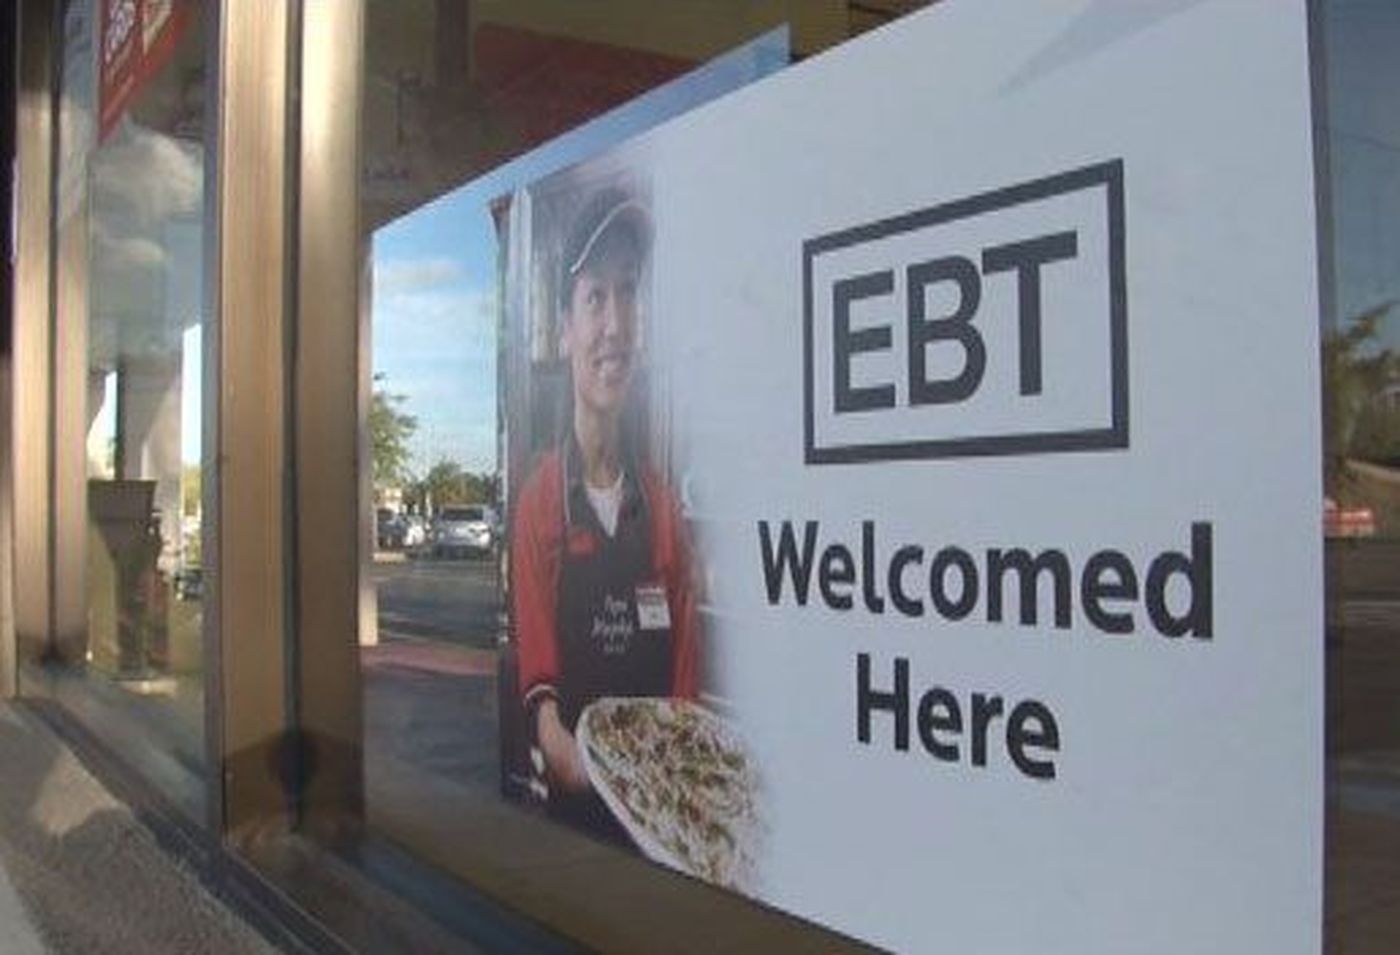 Fast Food Restaurants that accept EBT Food Stamps